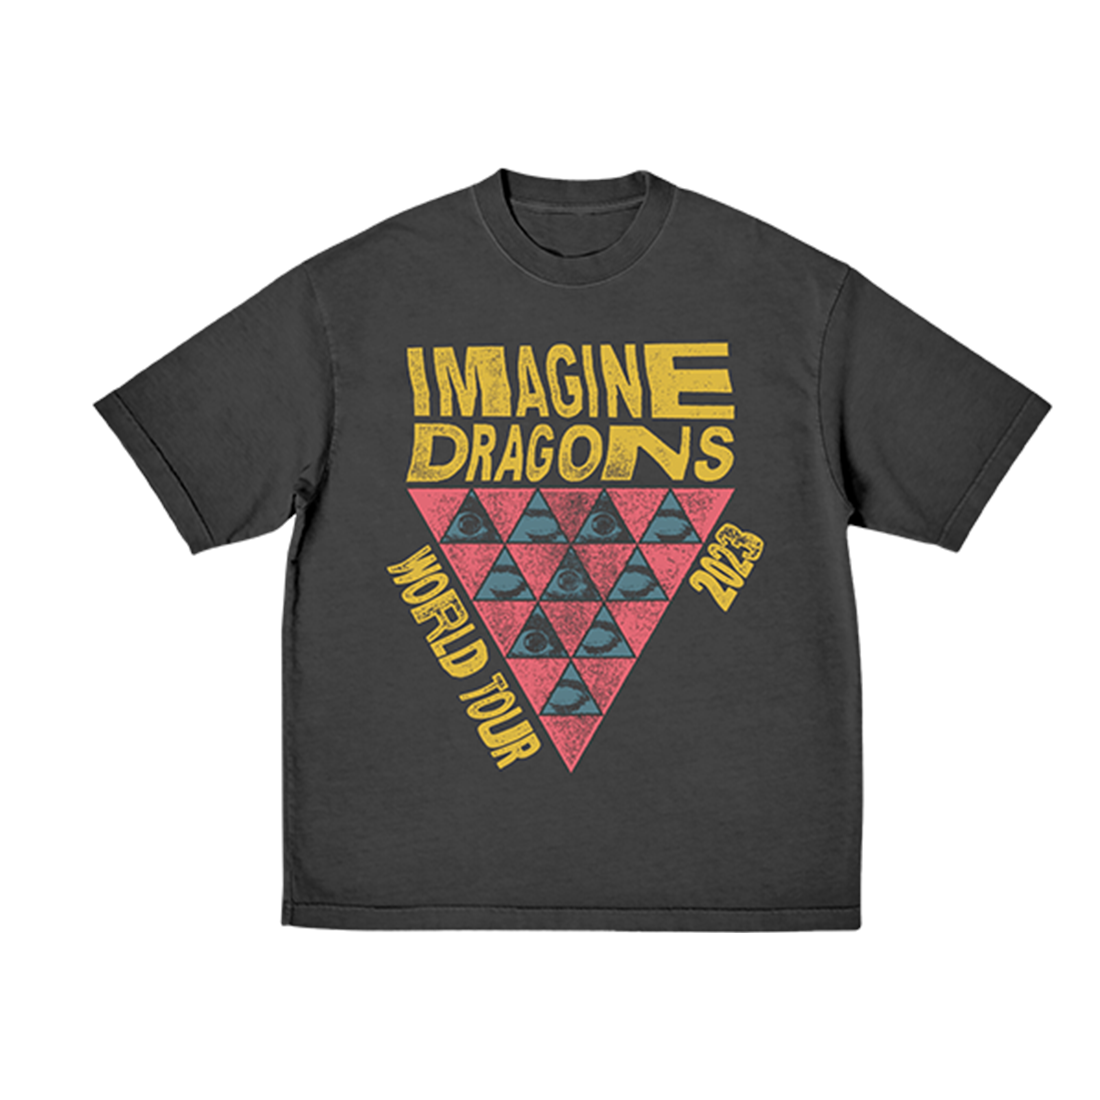 Imagine Dragons - Black EU Tour T-Shirt